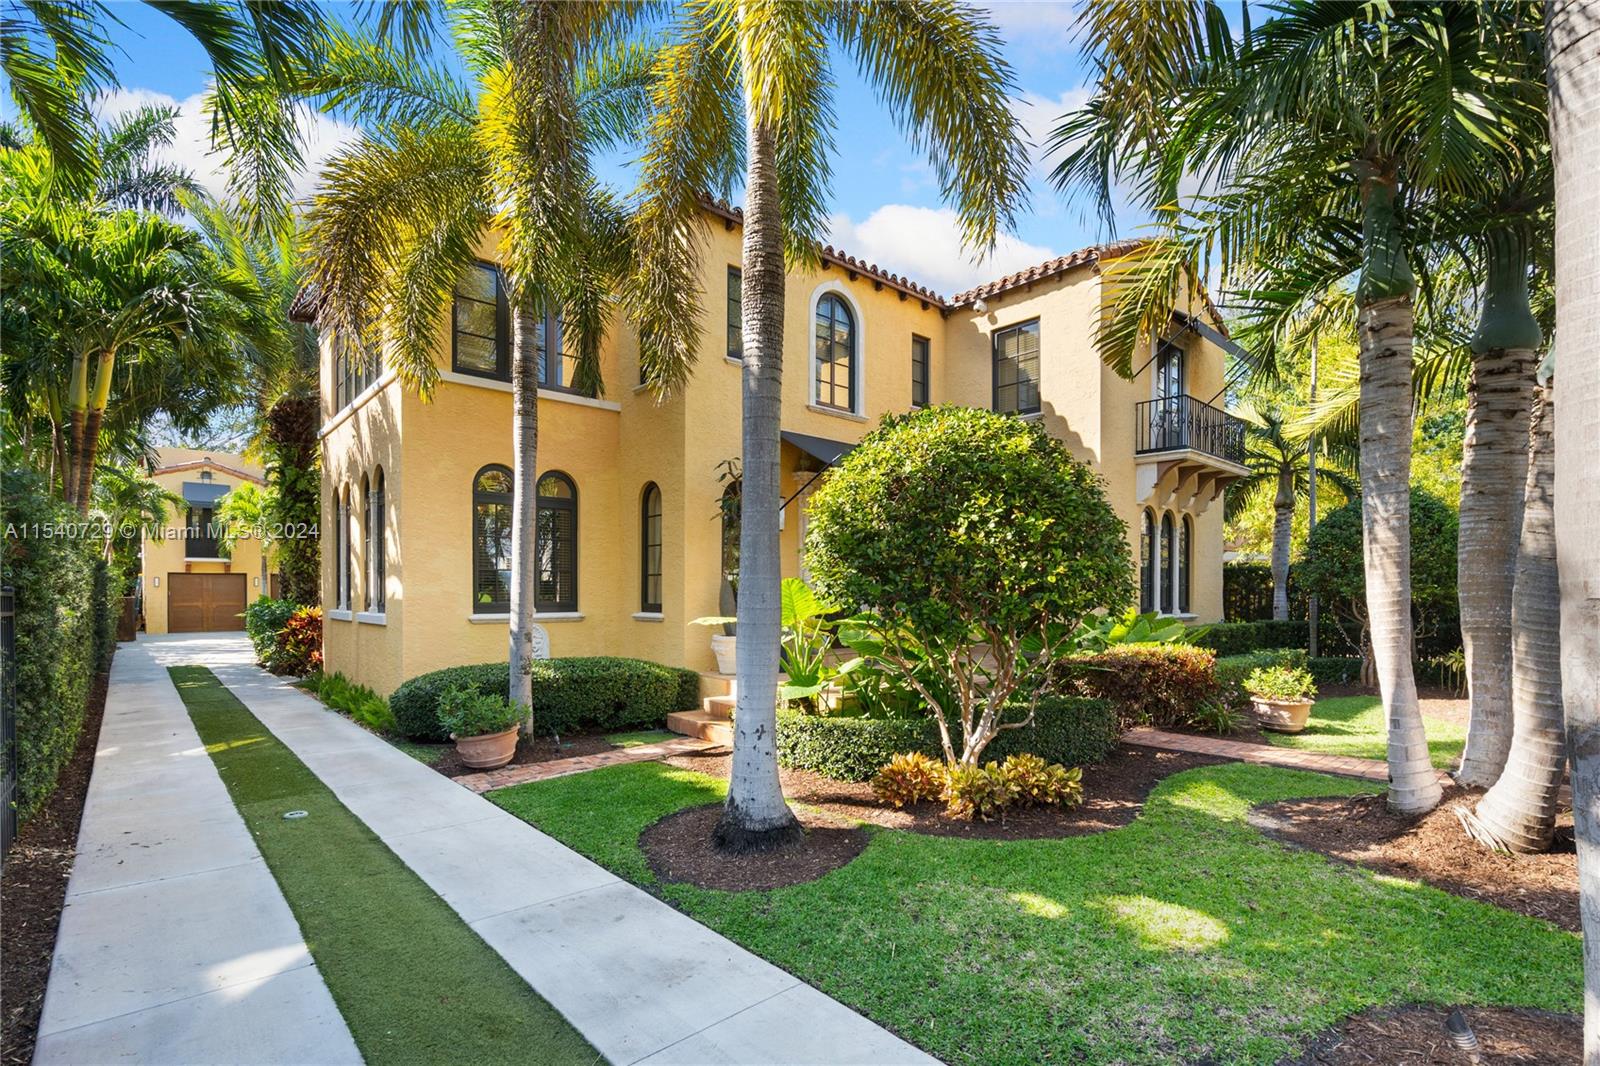 Rental Property at 2330 Prairie Ave, Miami Beach, Miami-Dade County, Florida - Bedrooms: 5 
Bathrooms: 5  - $16,500 MO.